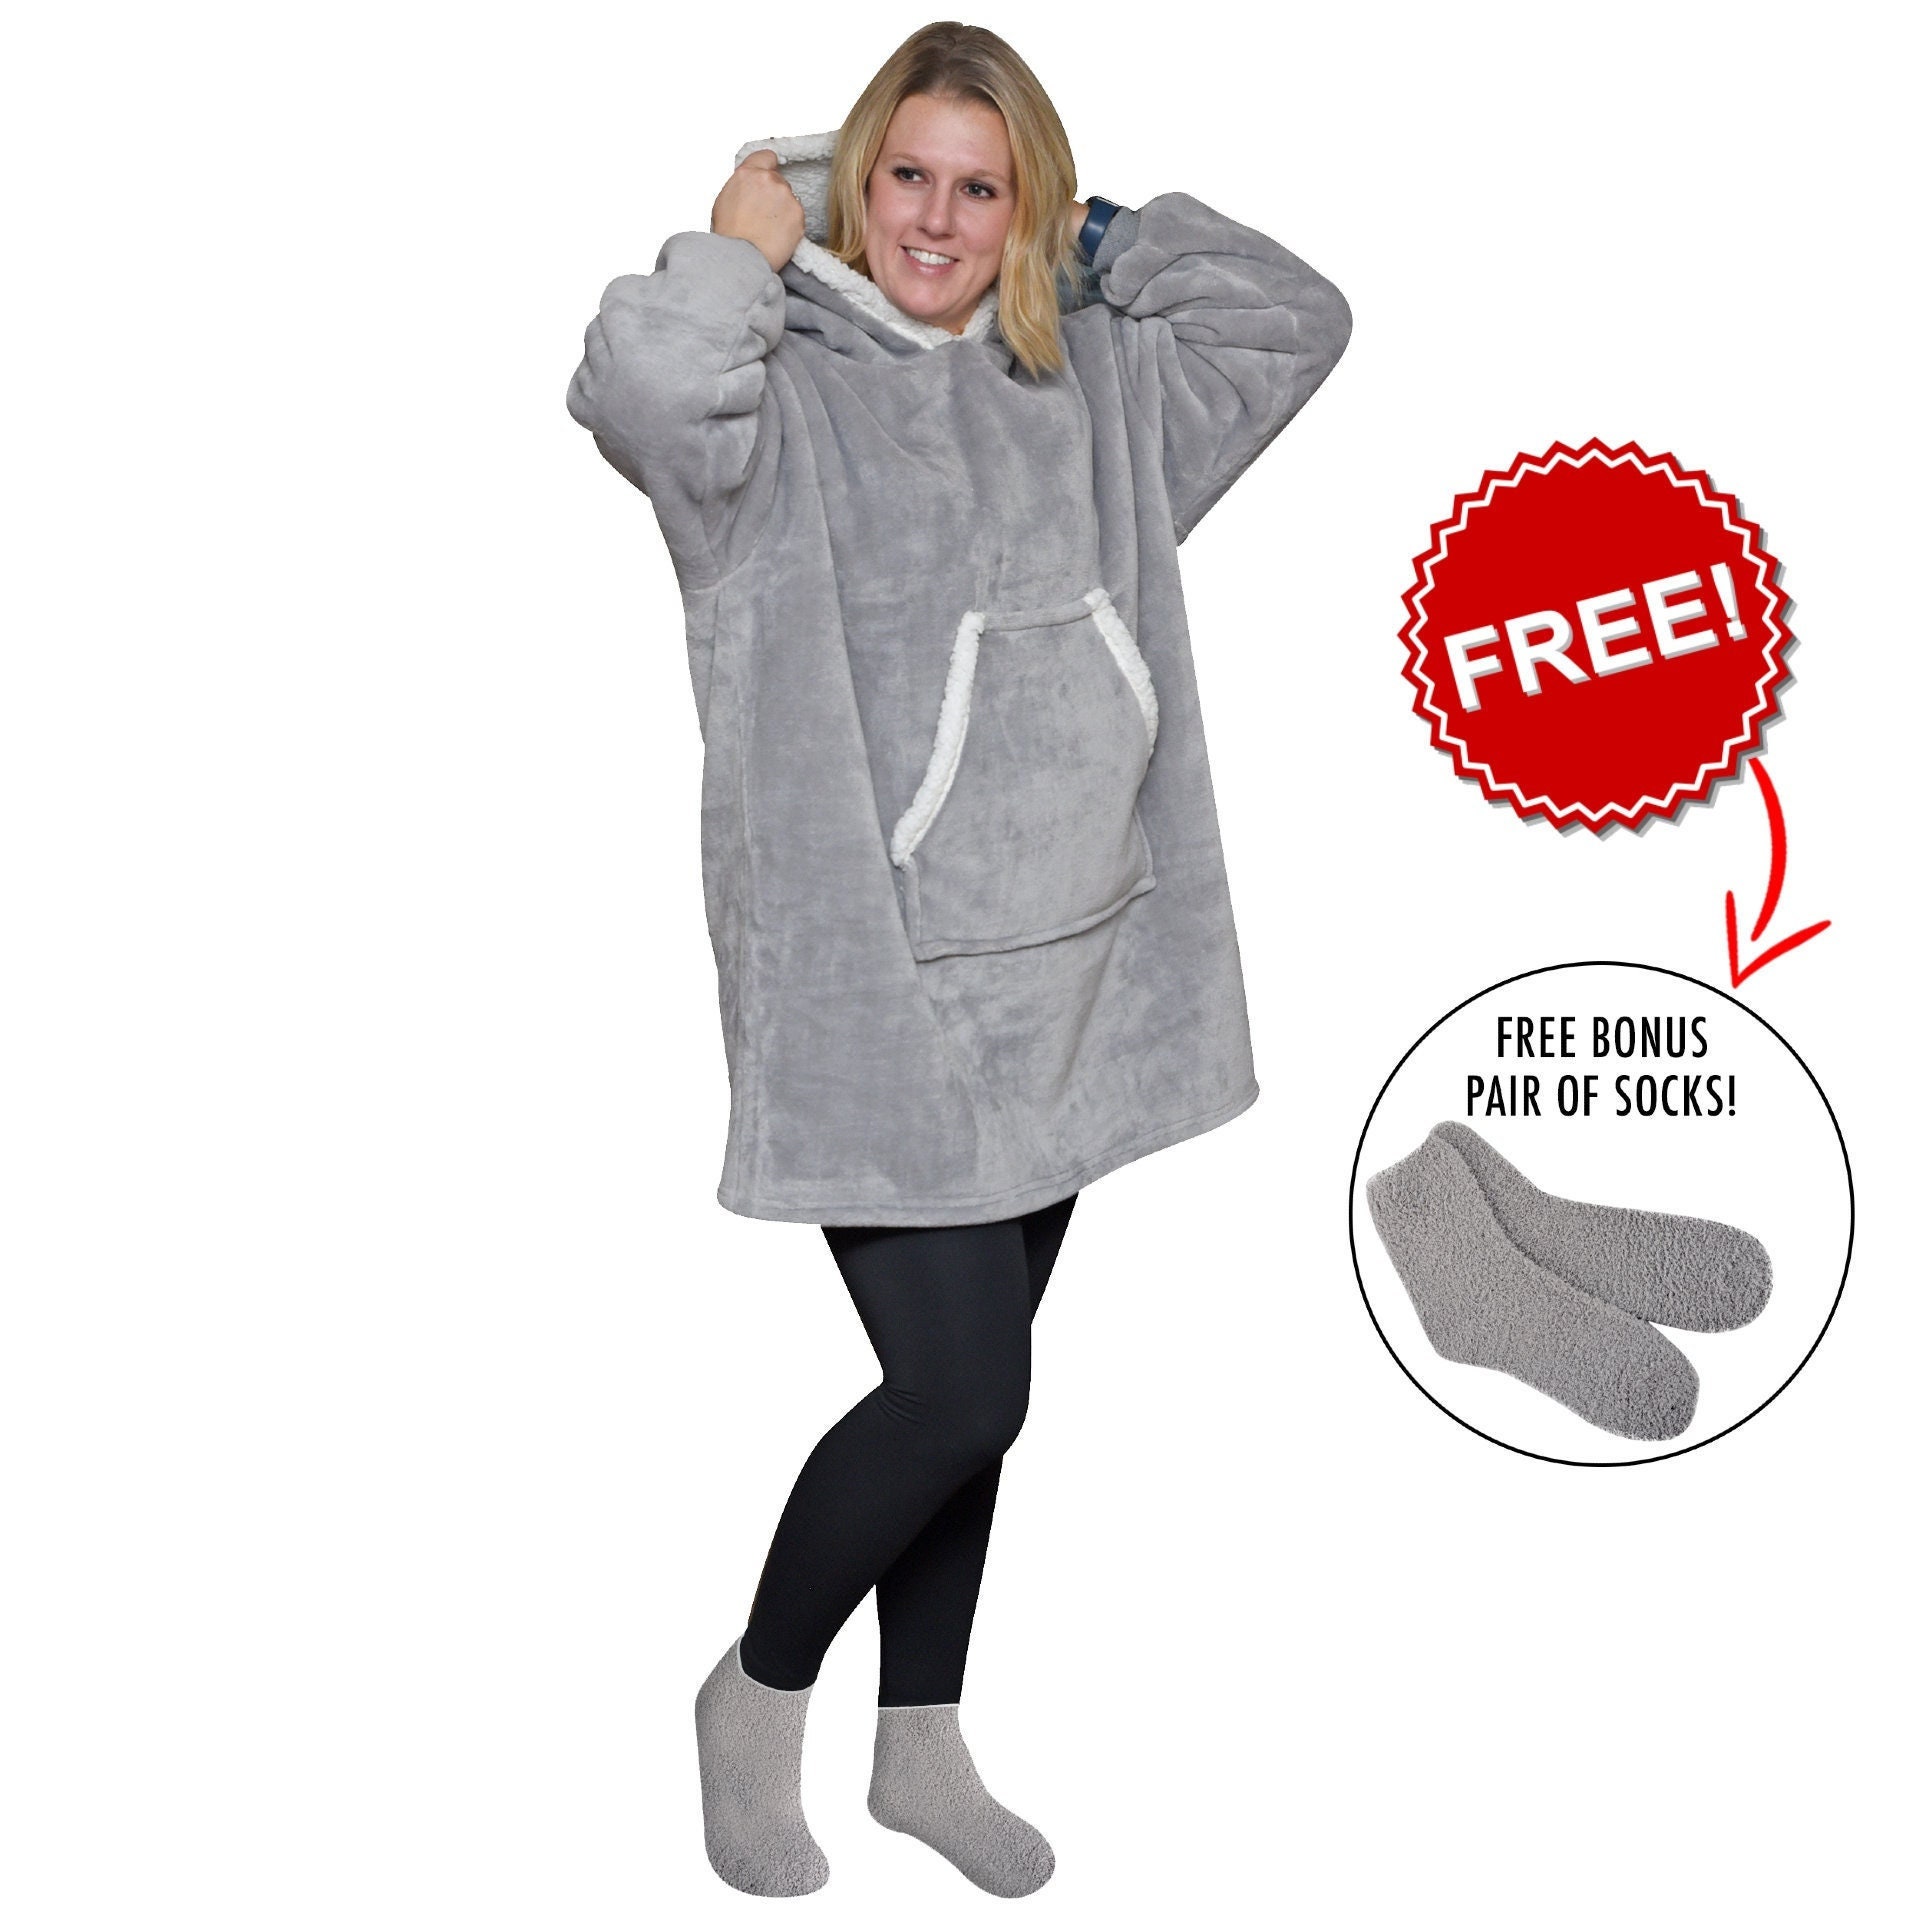 Comfortable Giant Hoody,Fit for Men Women Teens Warm Wangy Hoodie Sweatshirt Blanket,Oversized Super Soft 